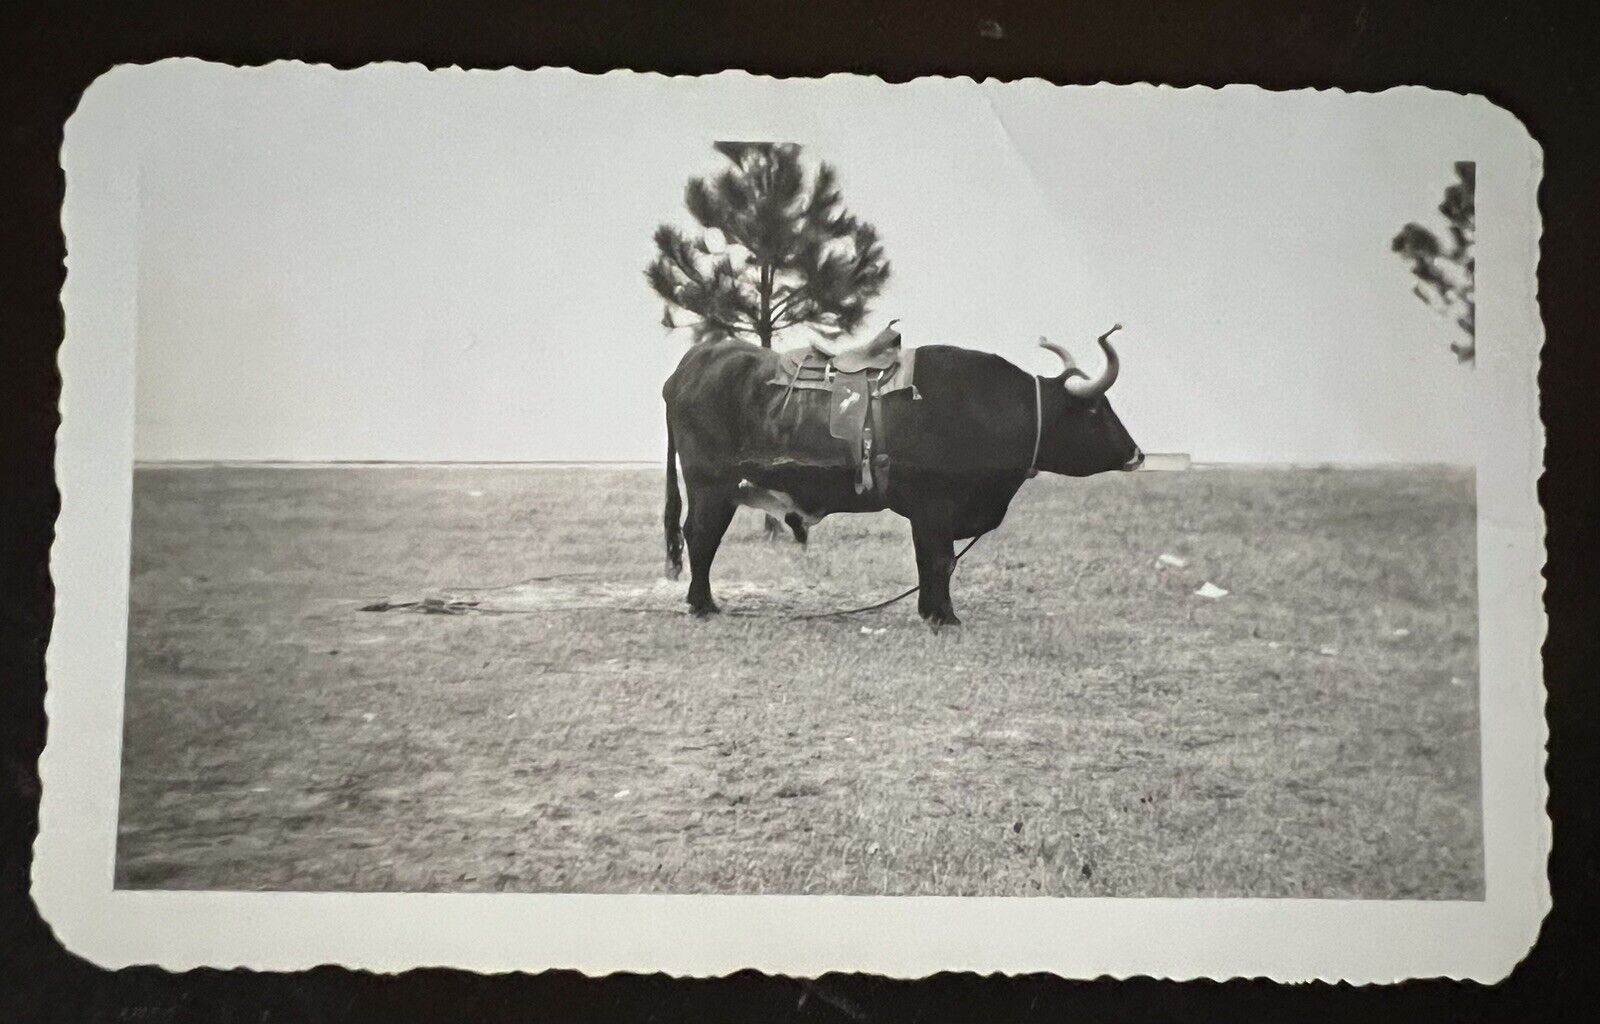 VTG 1940s Photo Huge Longhorn Bull in Field Wearing Saddle Deckle Edge Weird Odd